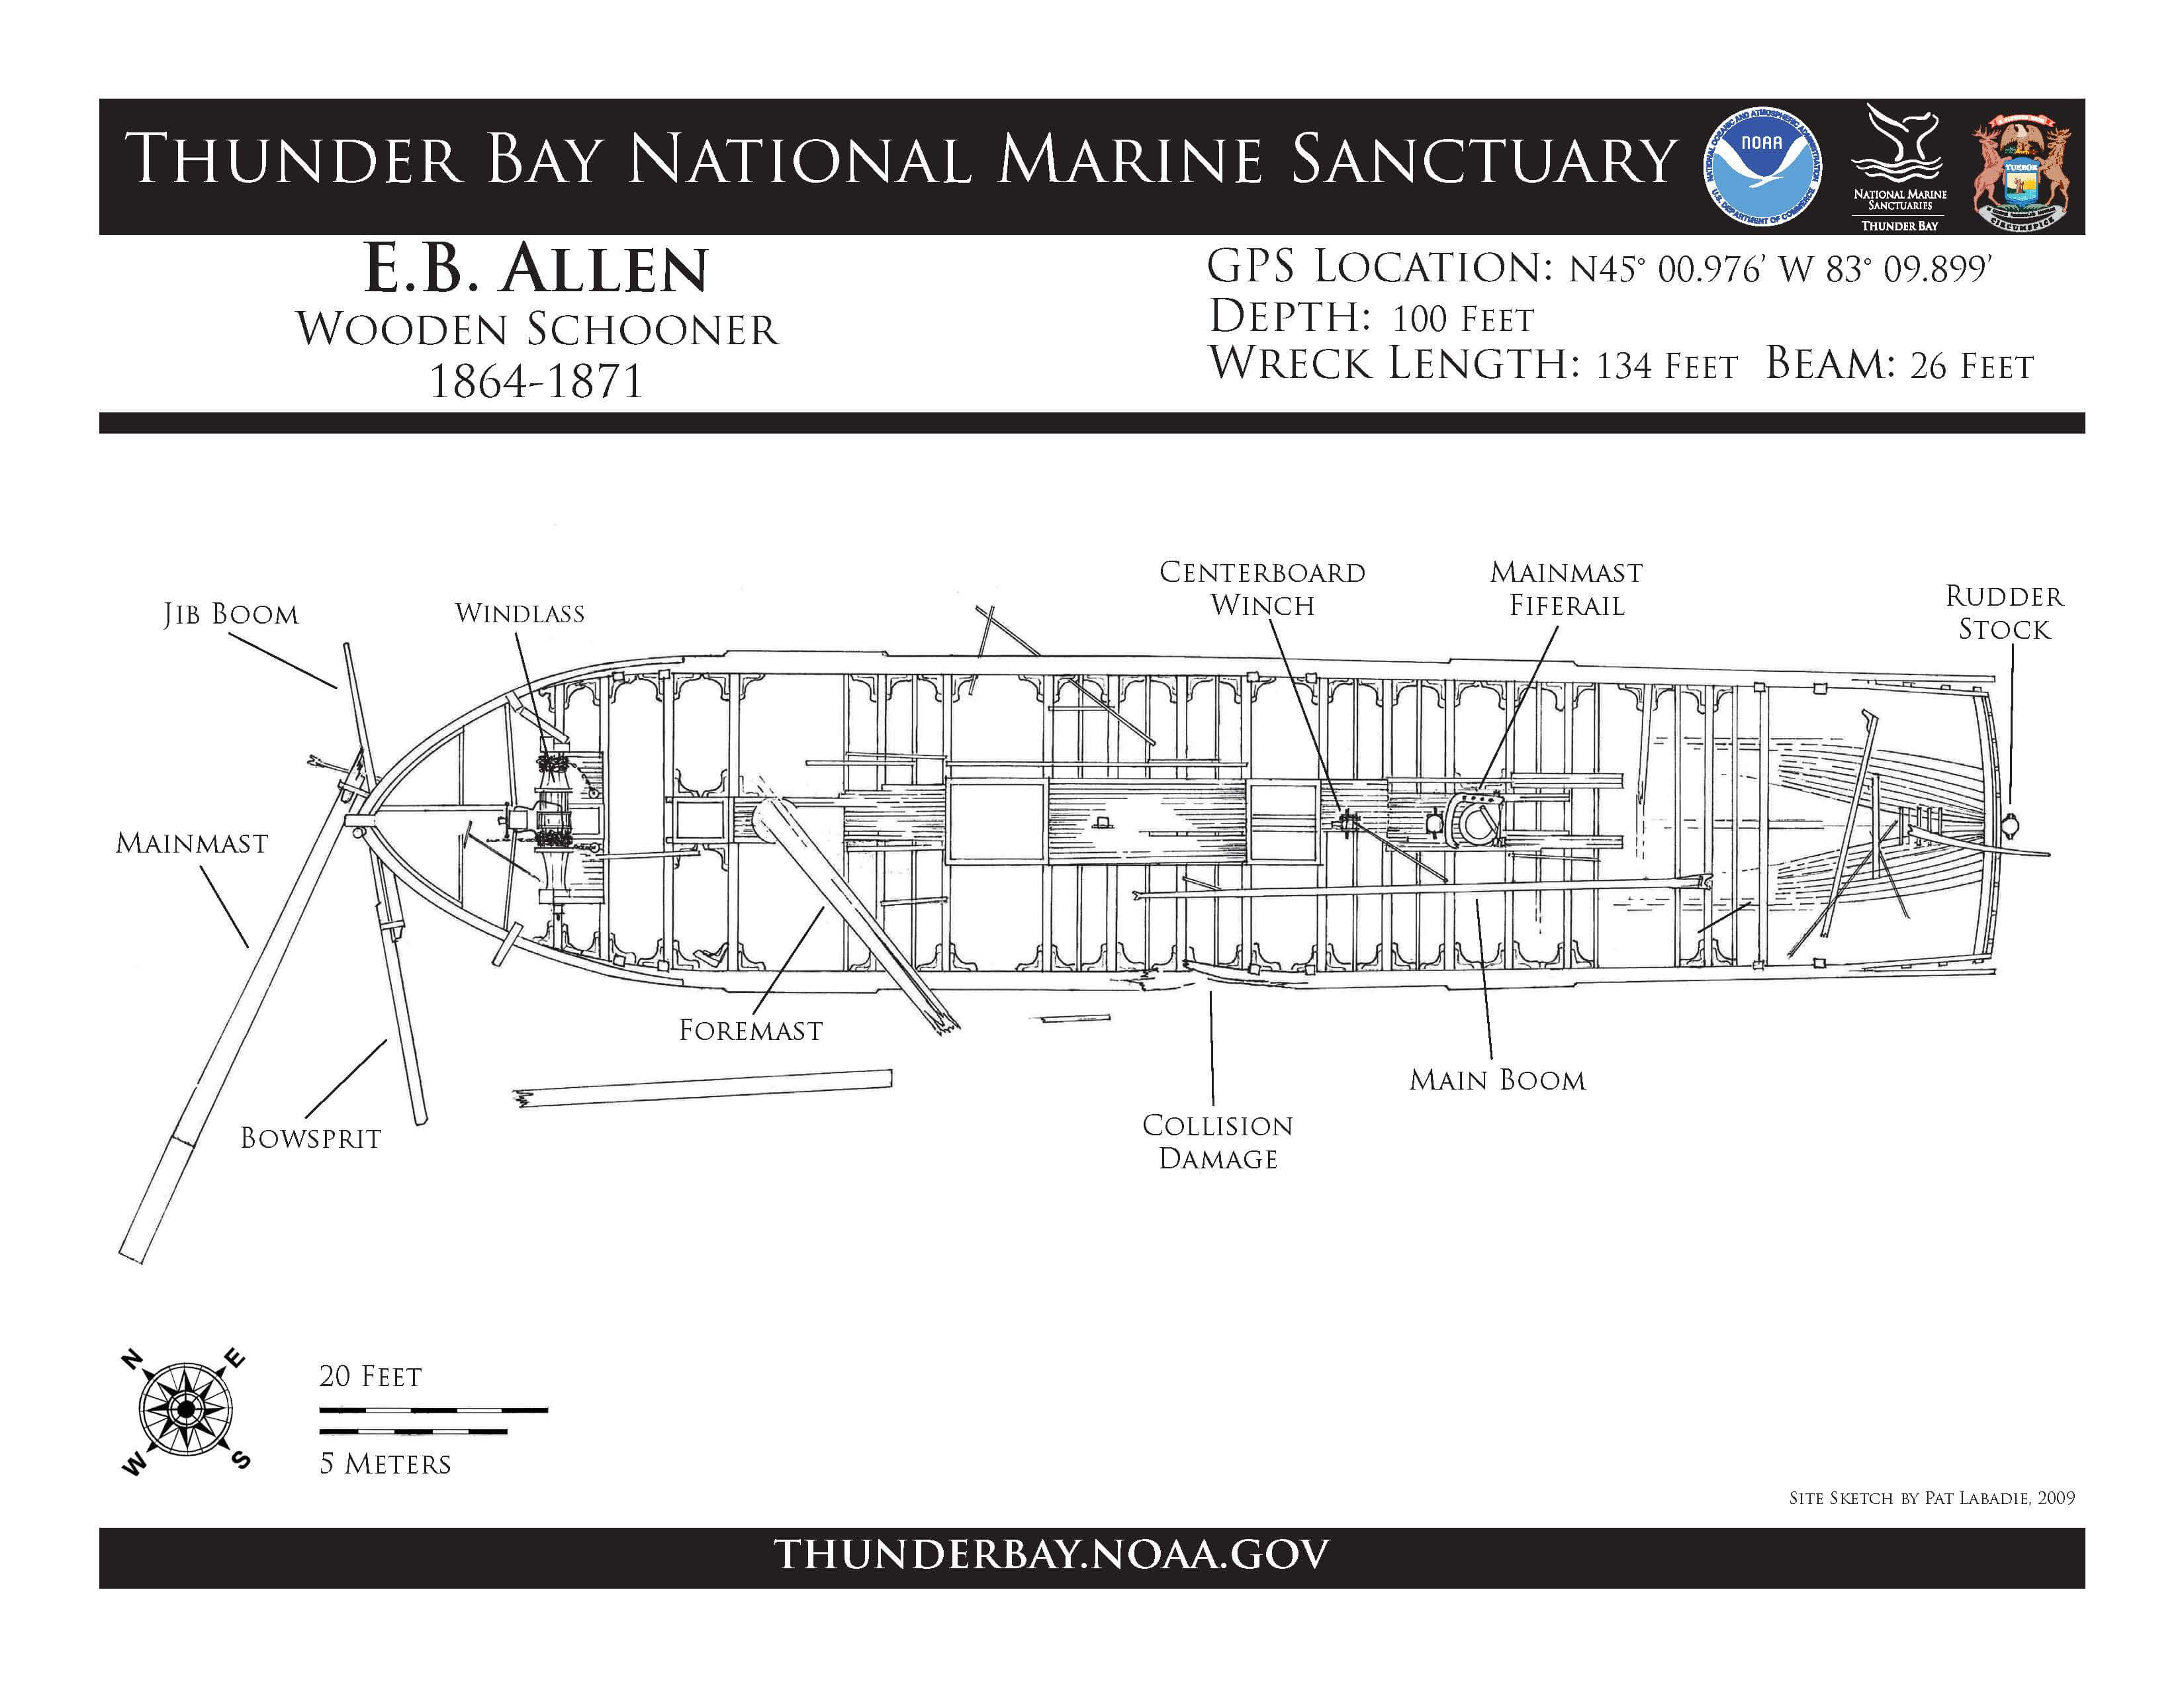 EB Allen ship site plan